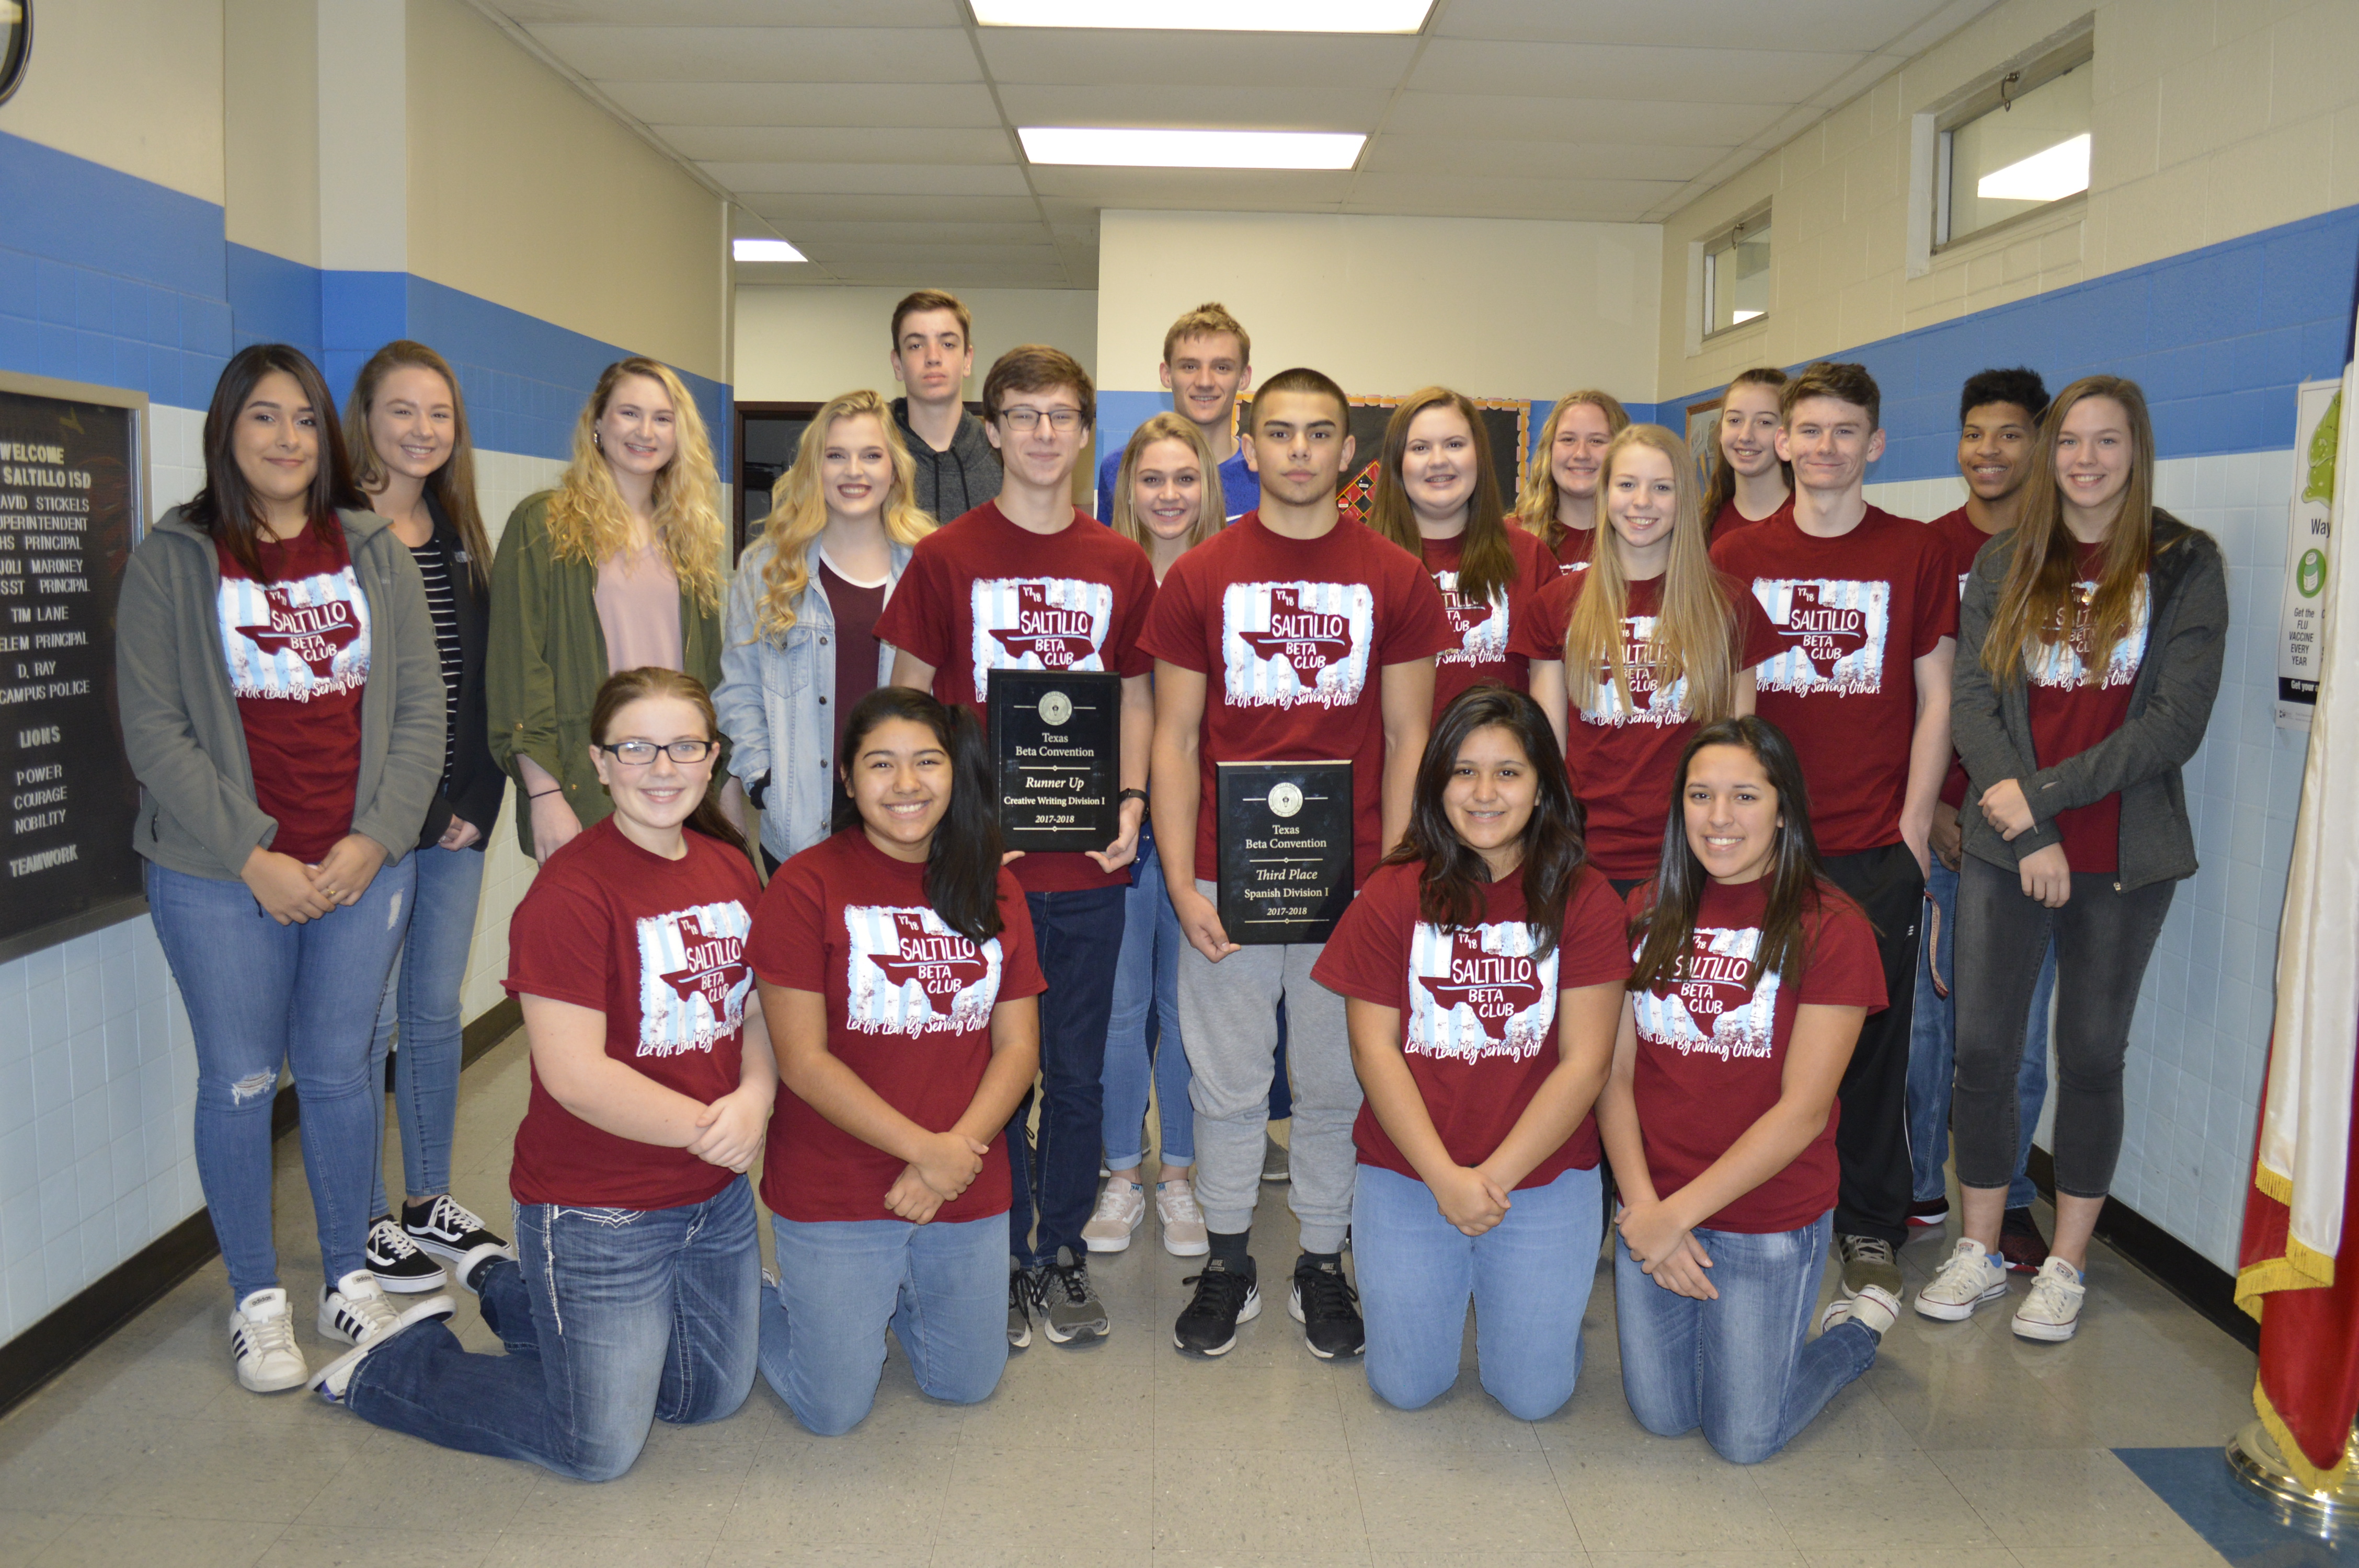 21 Saltillo BETA Students Attend State BETA Convention in Grapevine, Texas